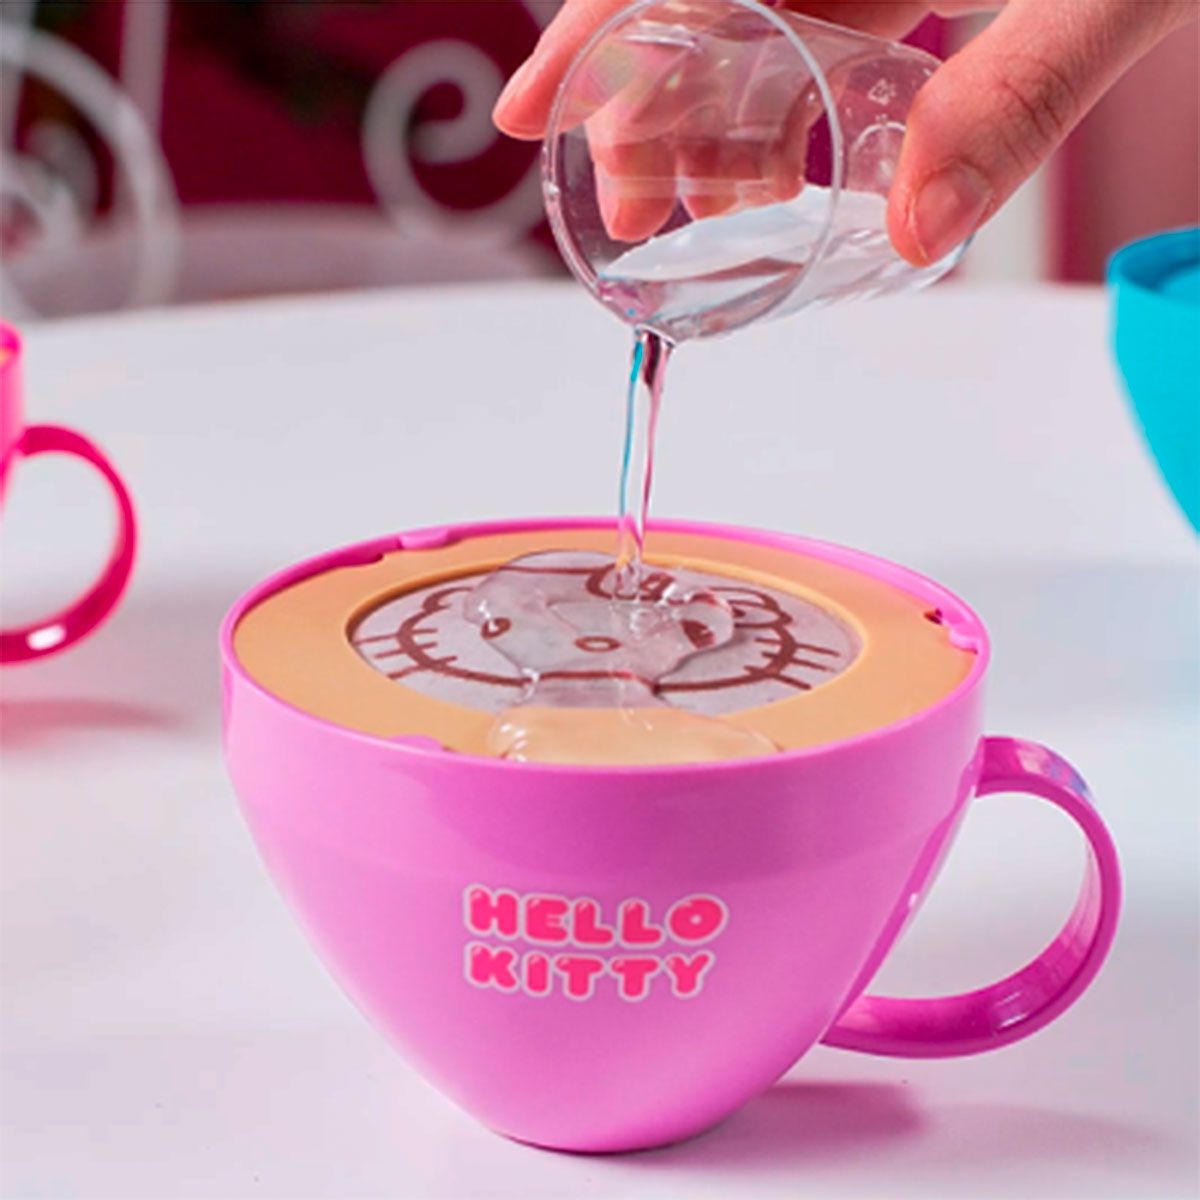 Коллекционная фигурка-сюрприз "Hello Kitty" (розовый)